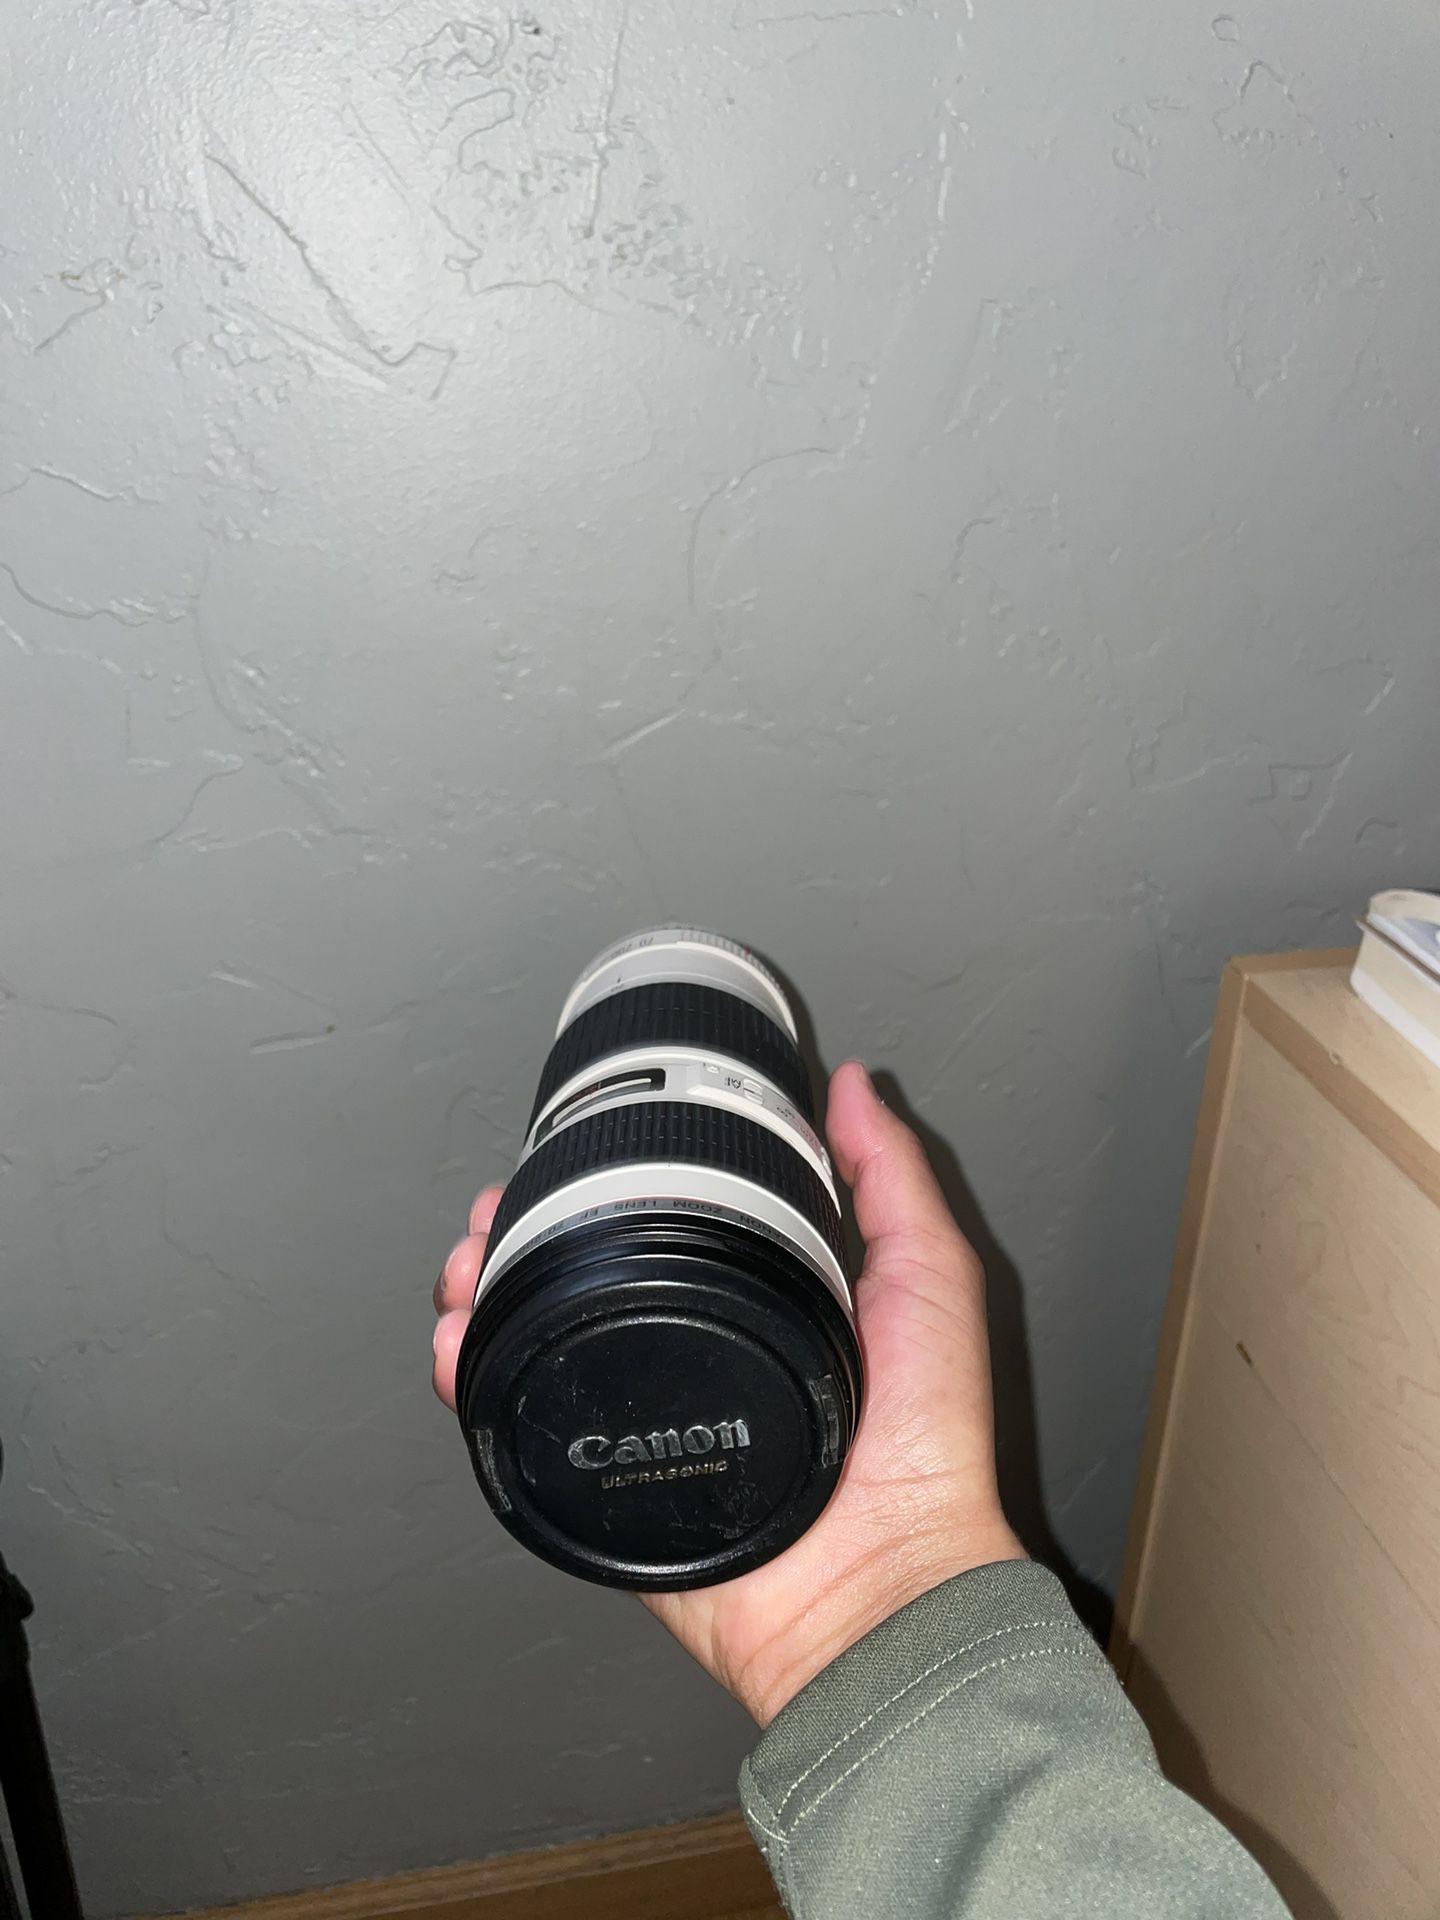 70-200 mm Canon Lens 